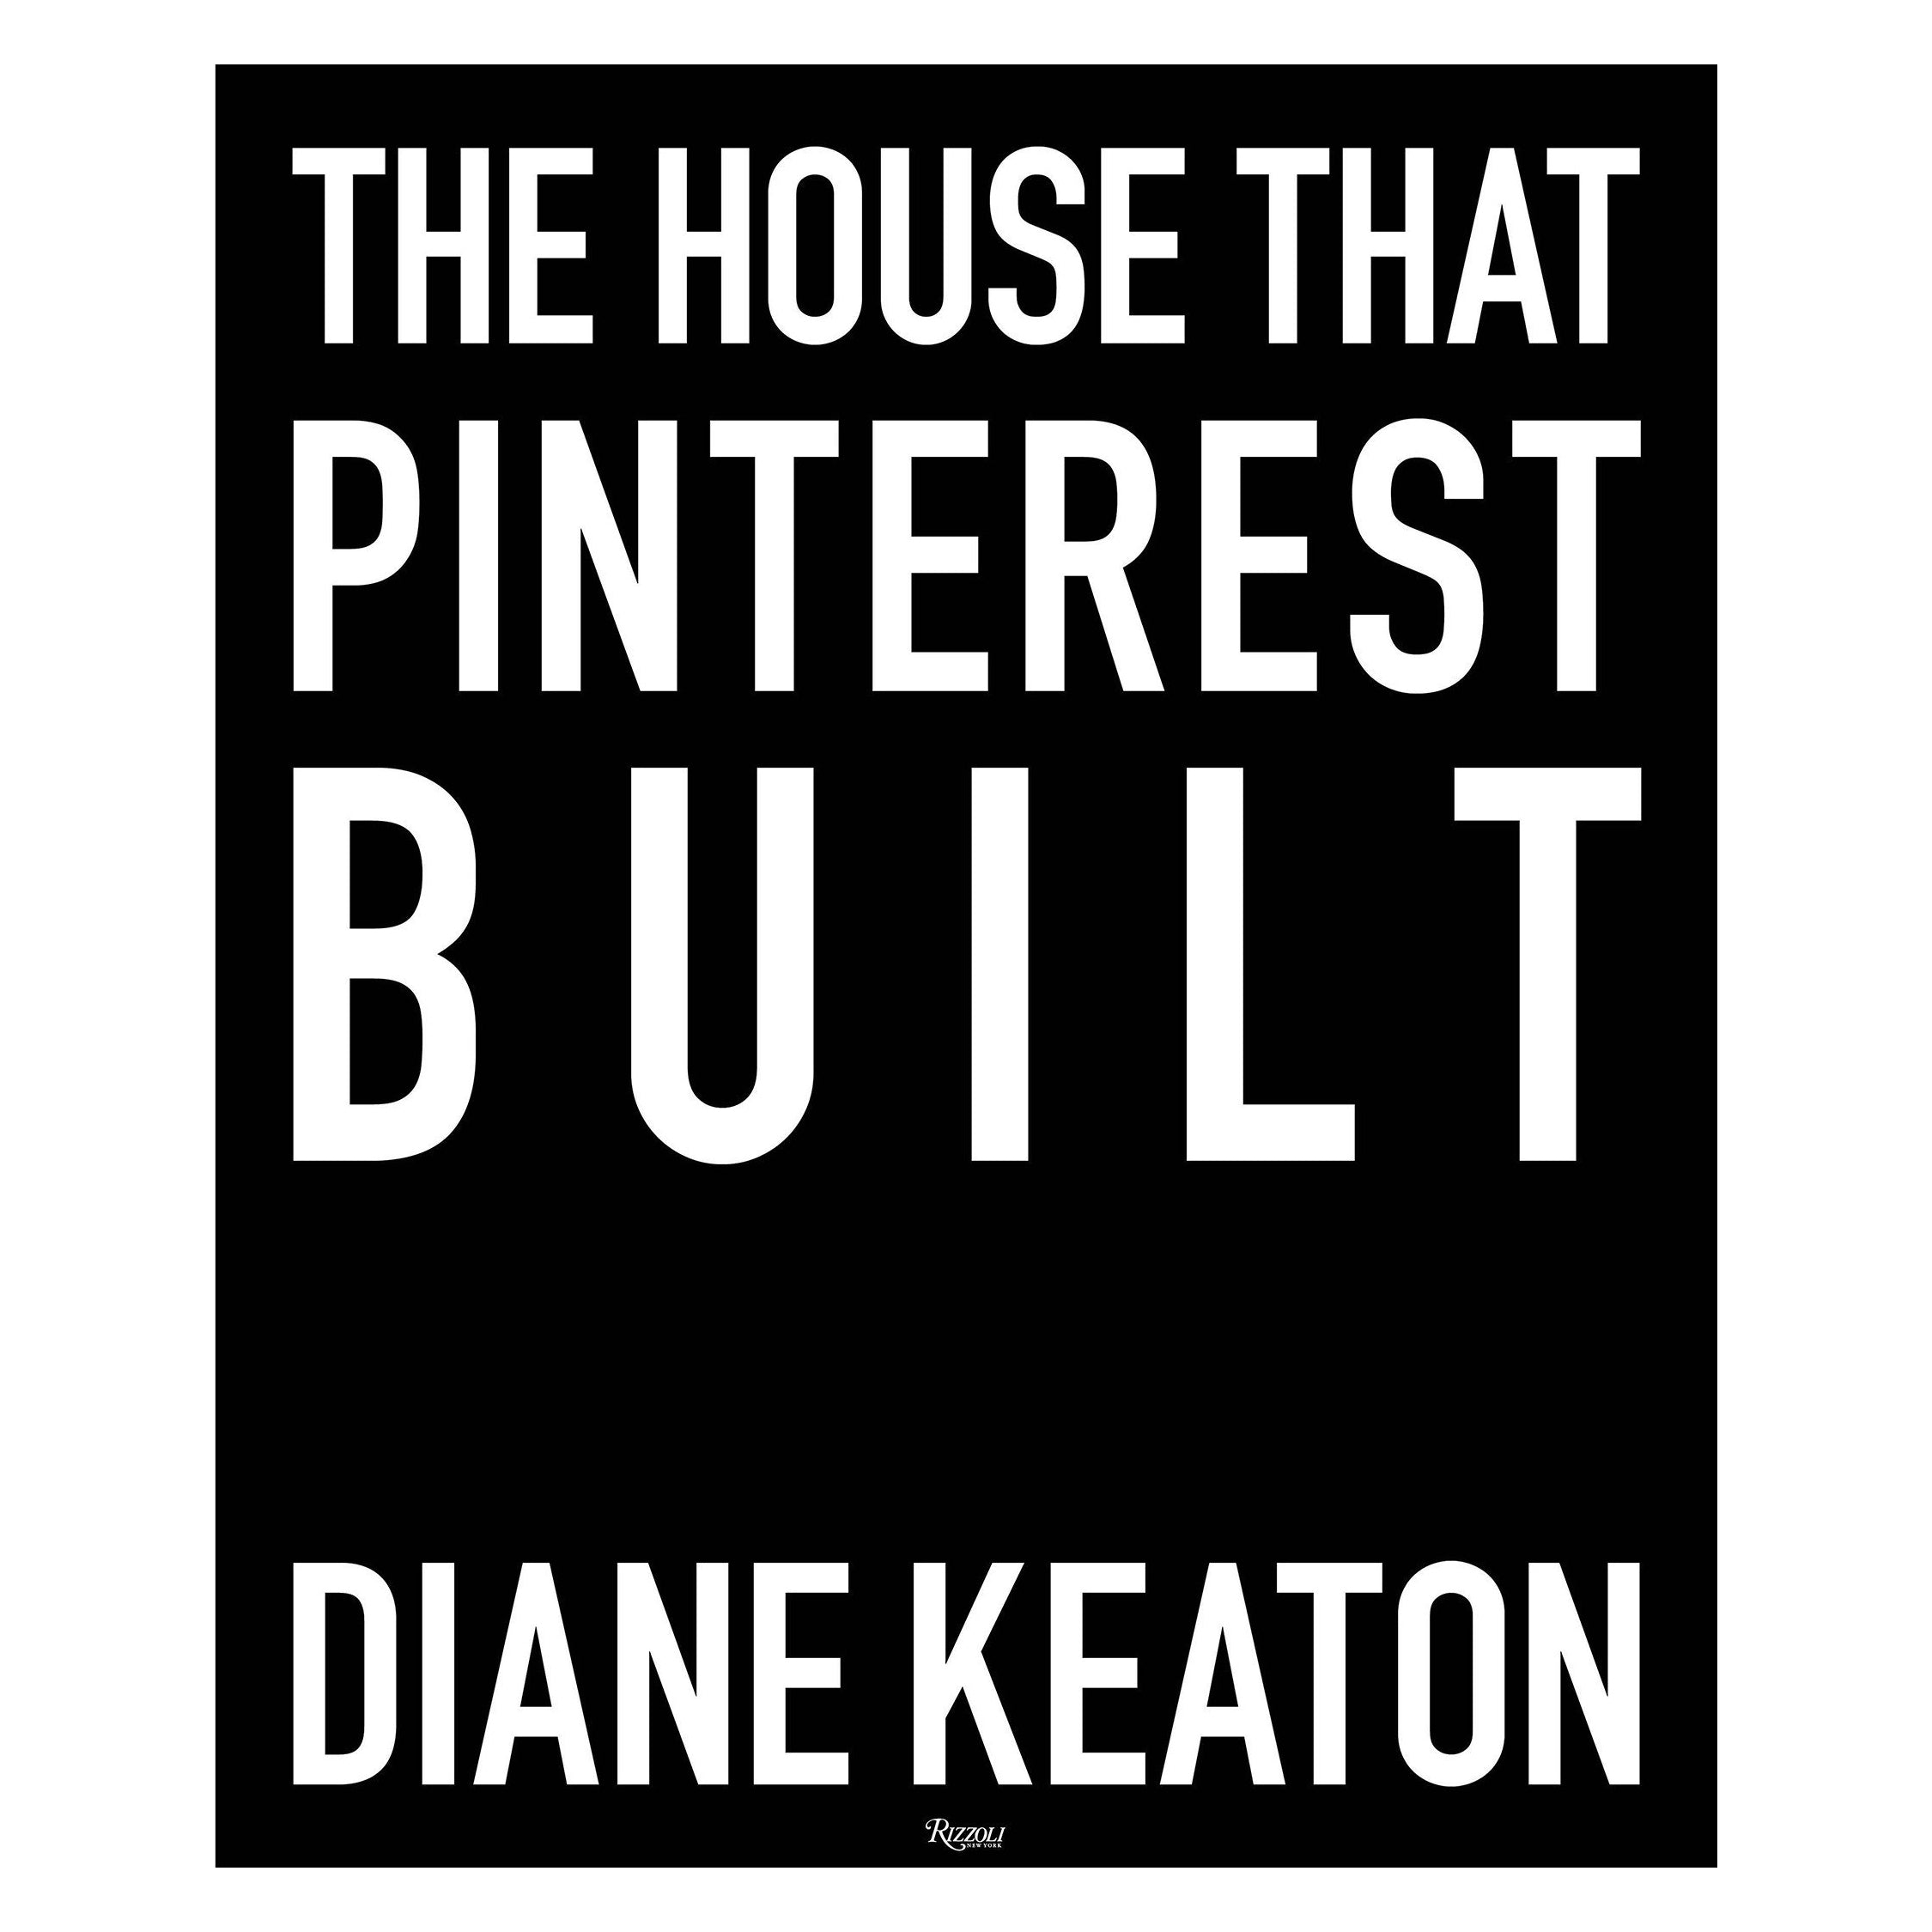 The House that Pinterest Built - Black Rooster Maison